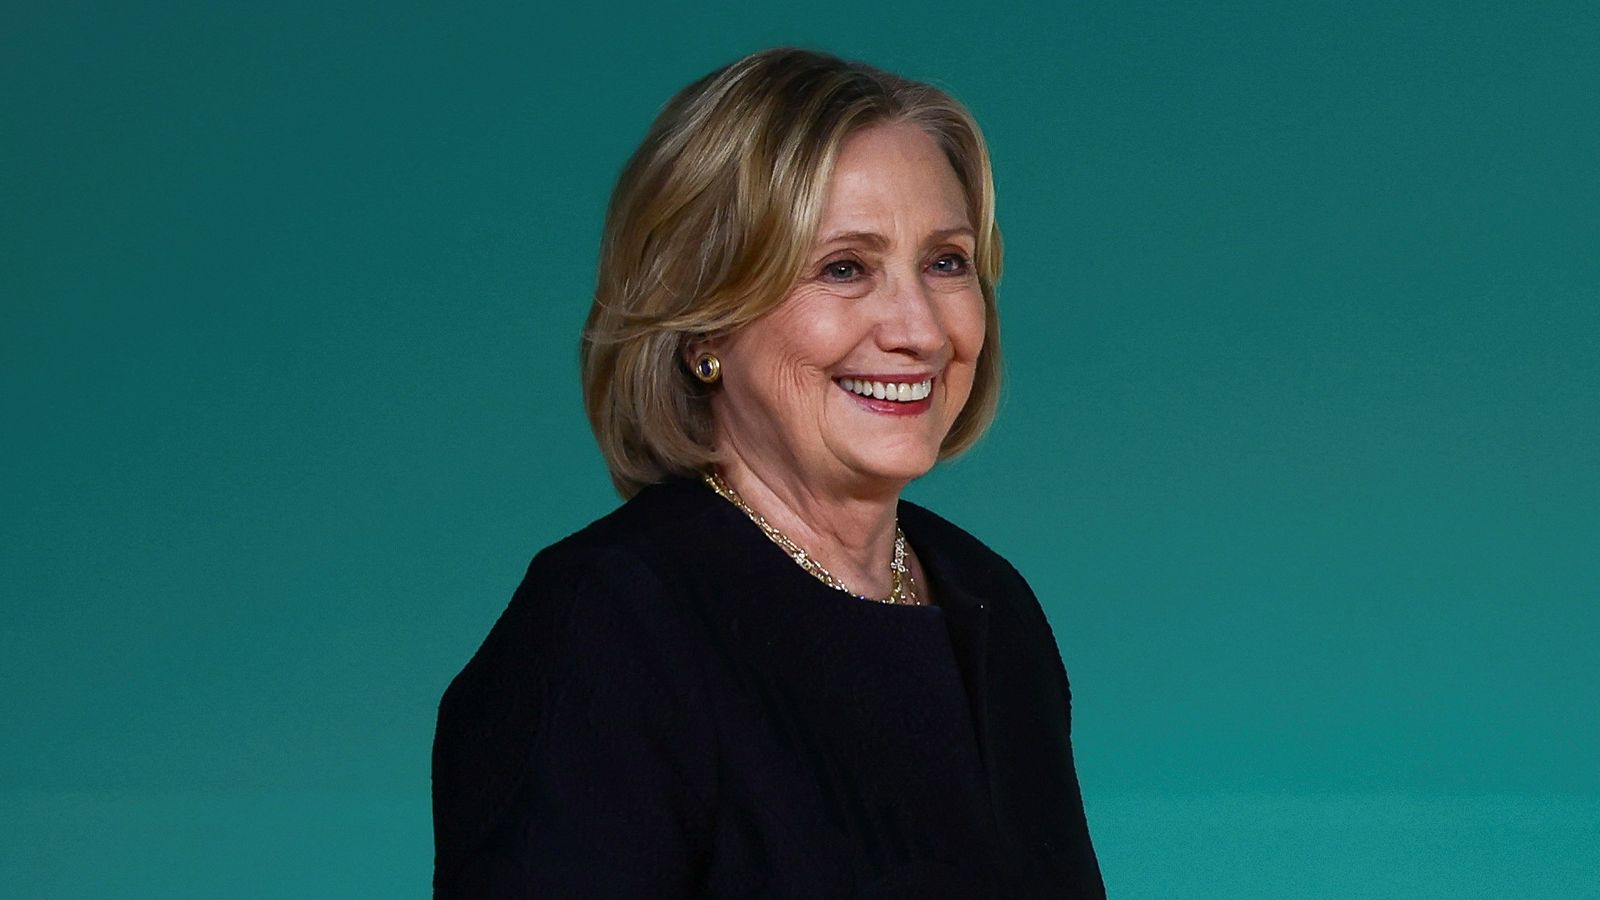 Hillary Clinton reacts to Margot Robbie and Greta Gerwig Oscars snubs